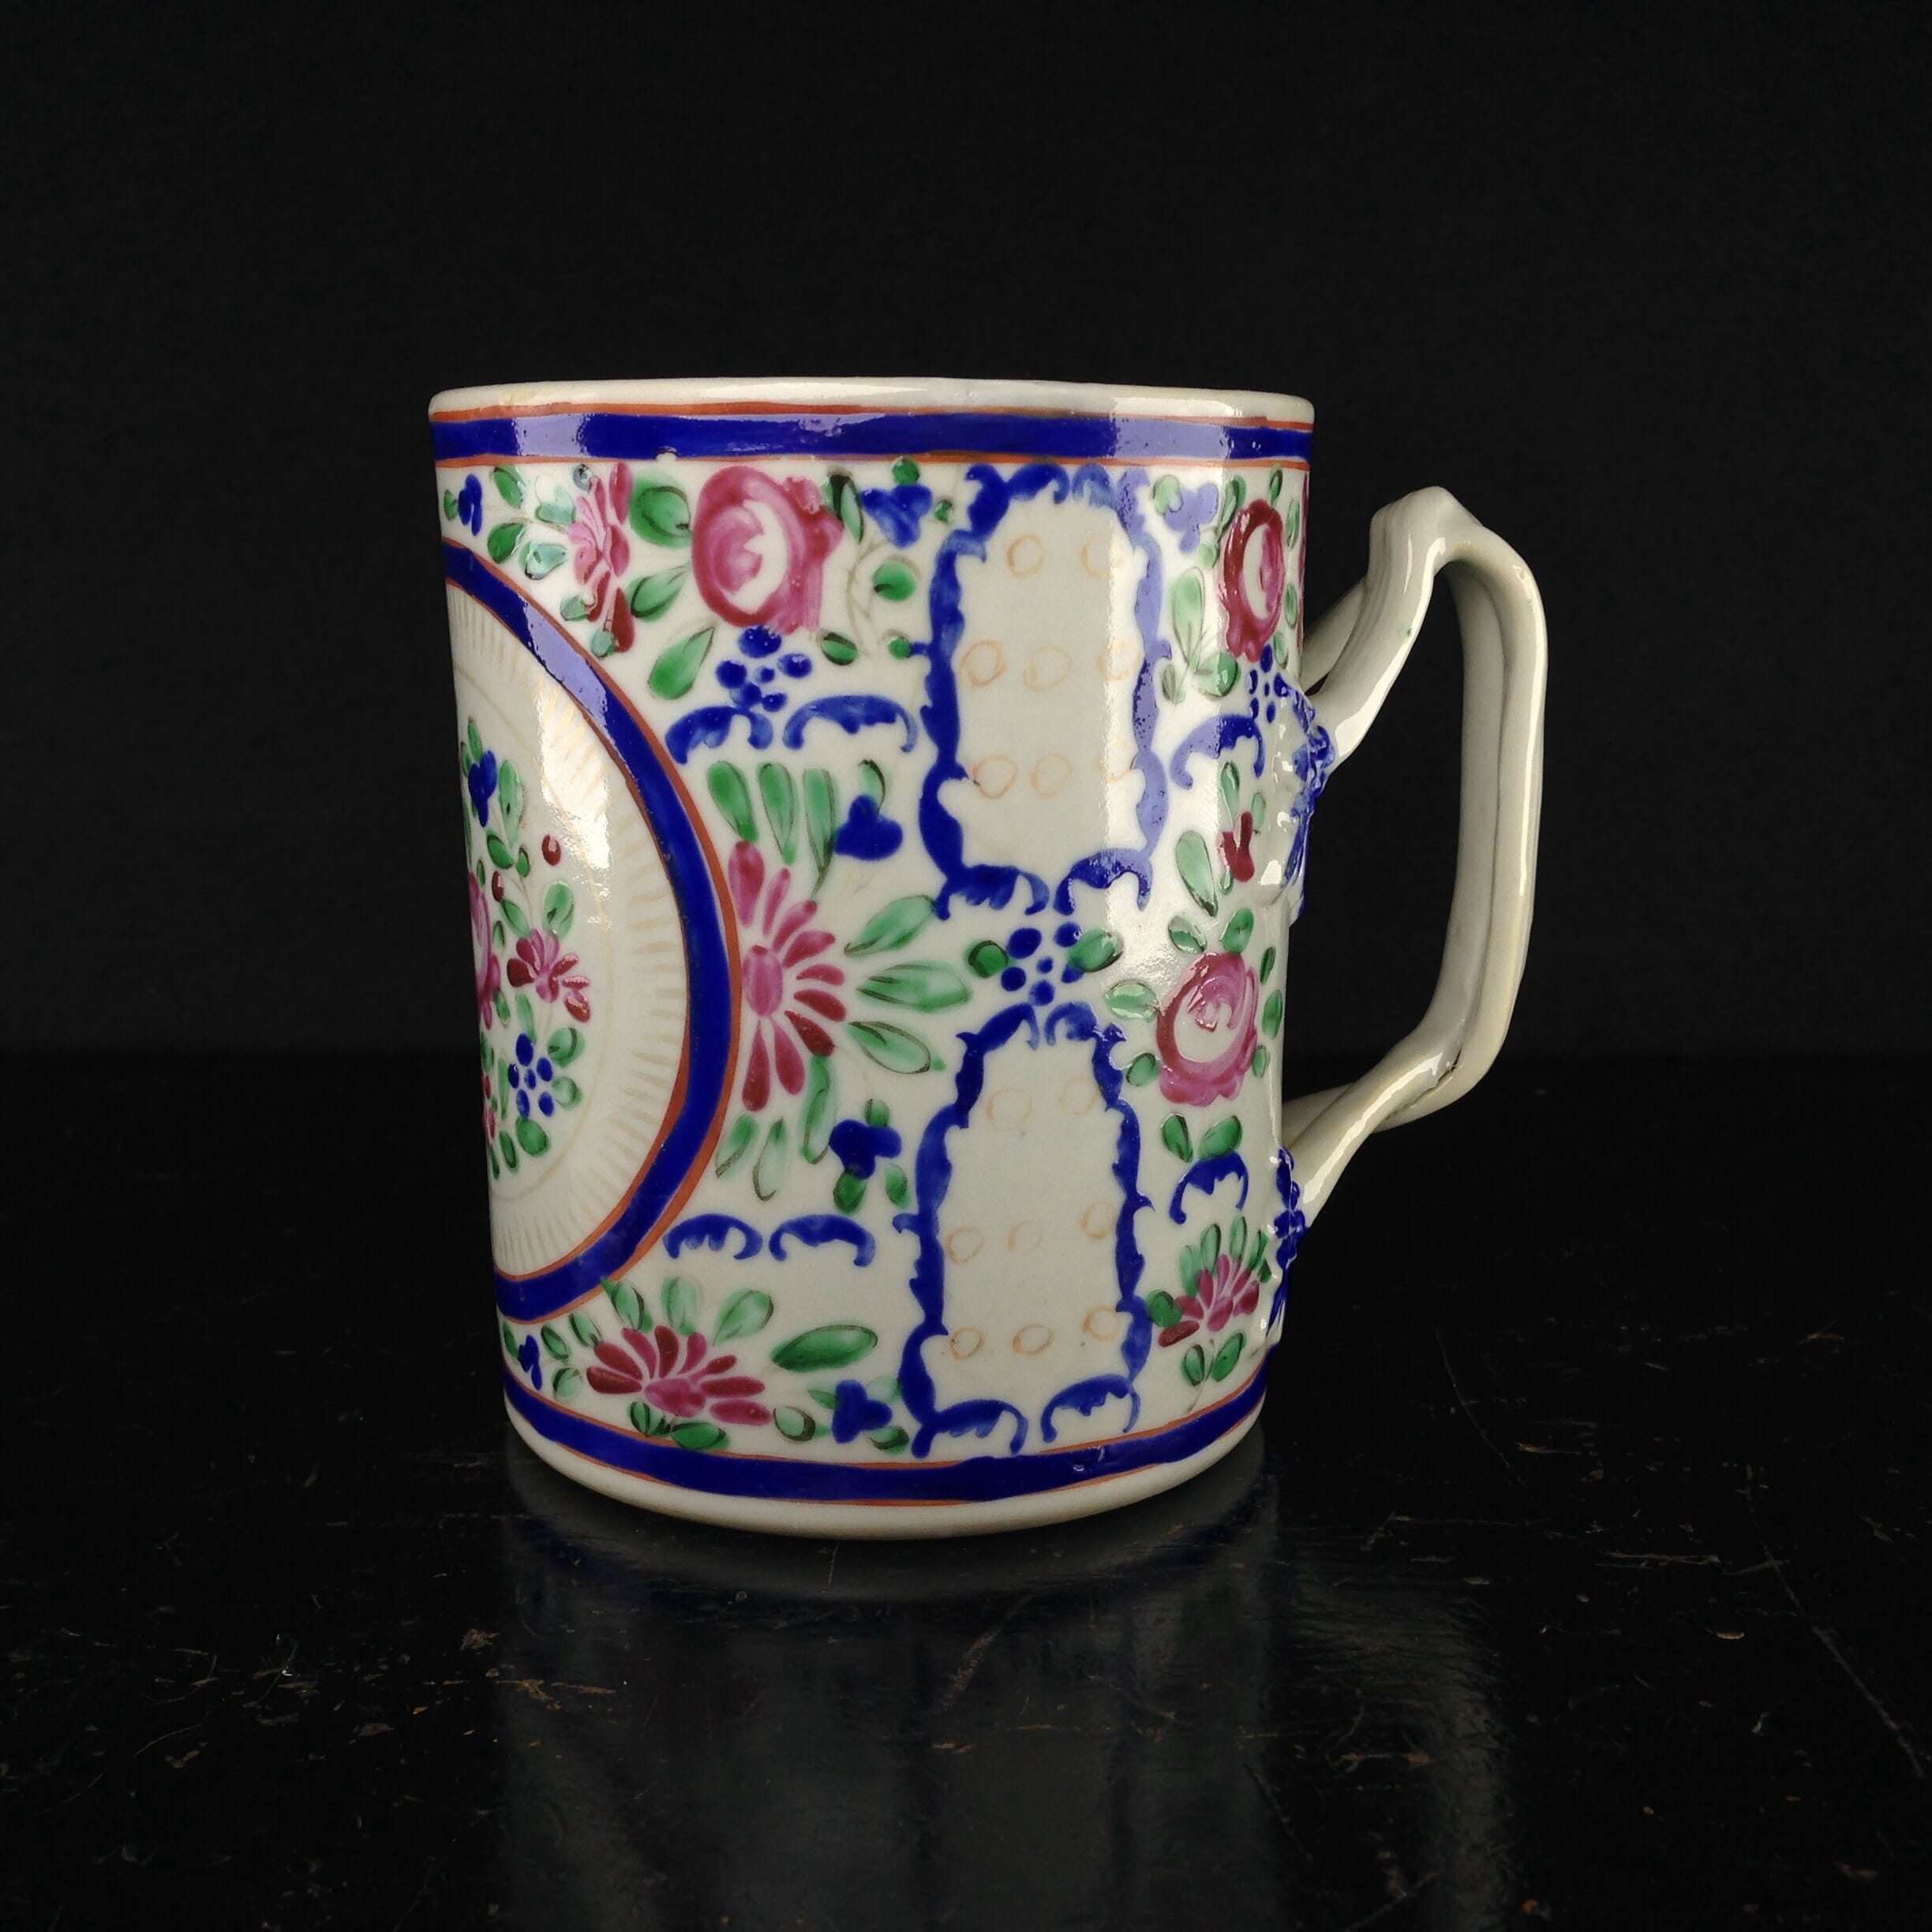 Chinese Export mug, Turkish market, c.1780-0